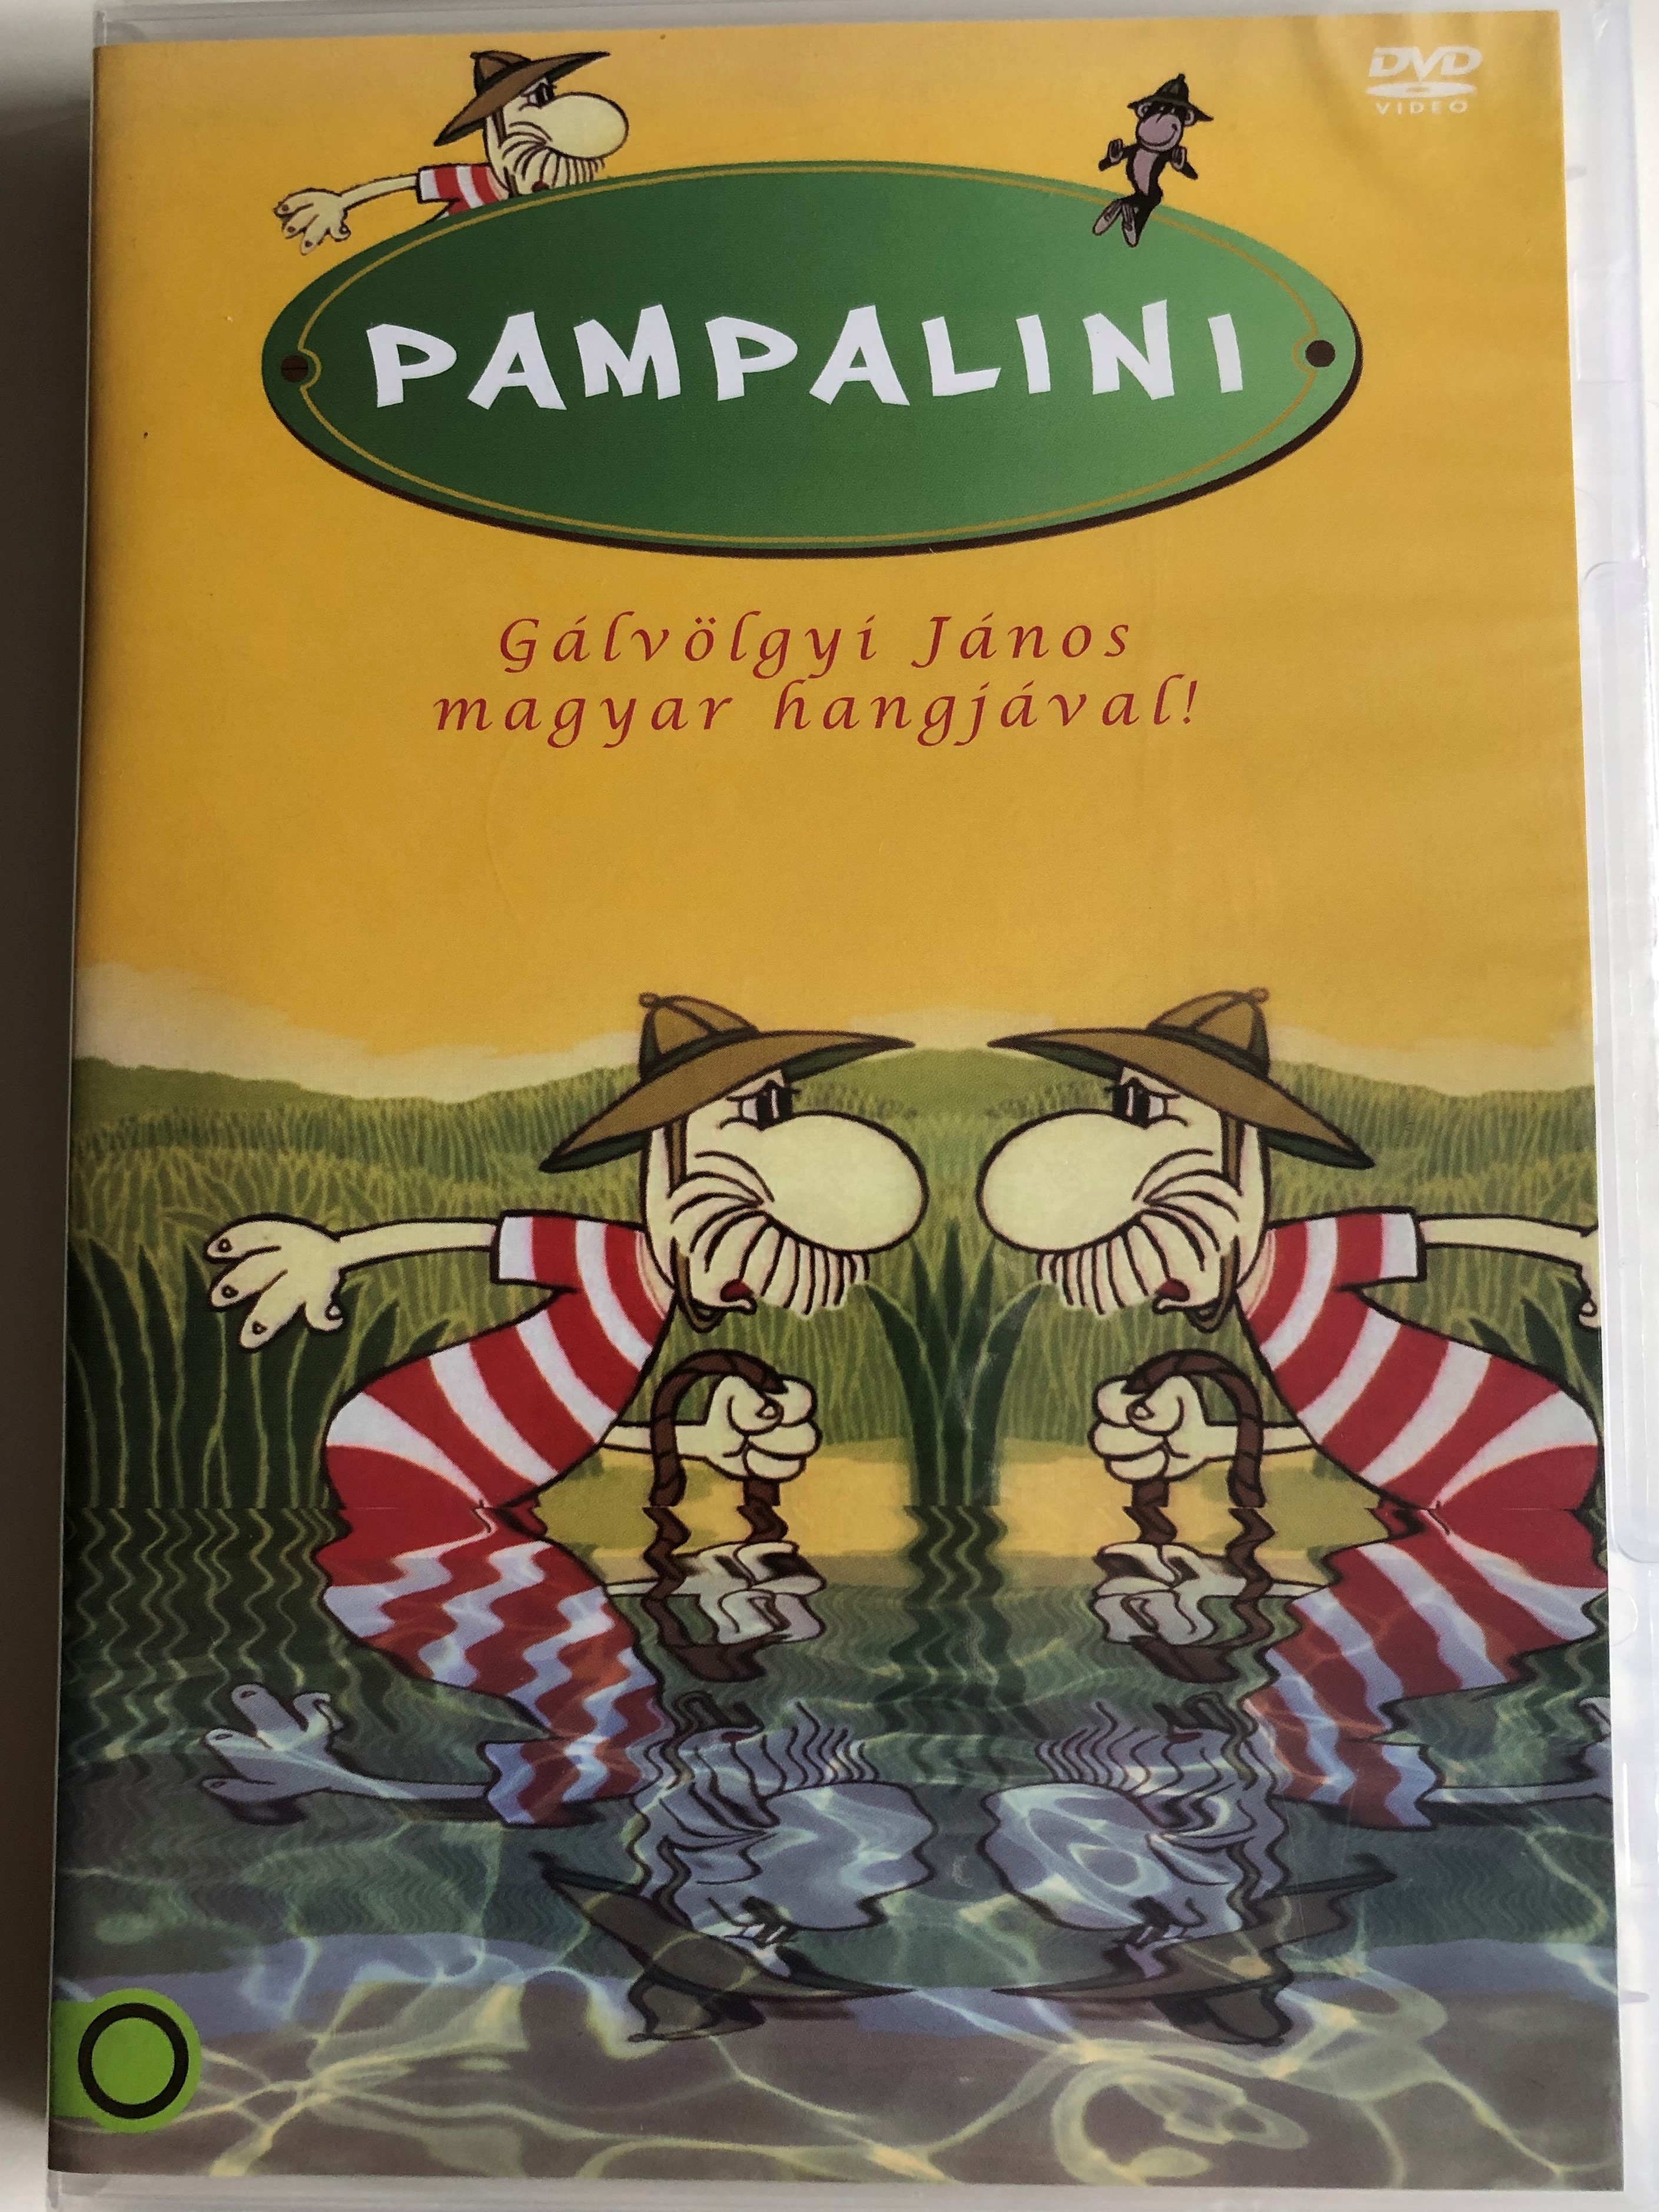 pampalini-lowca-zwierzat-dvd-1977-pampalini-sorozat-1.jpg